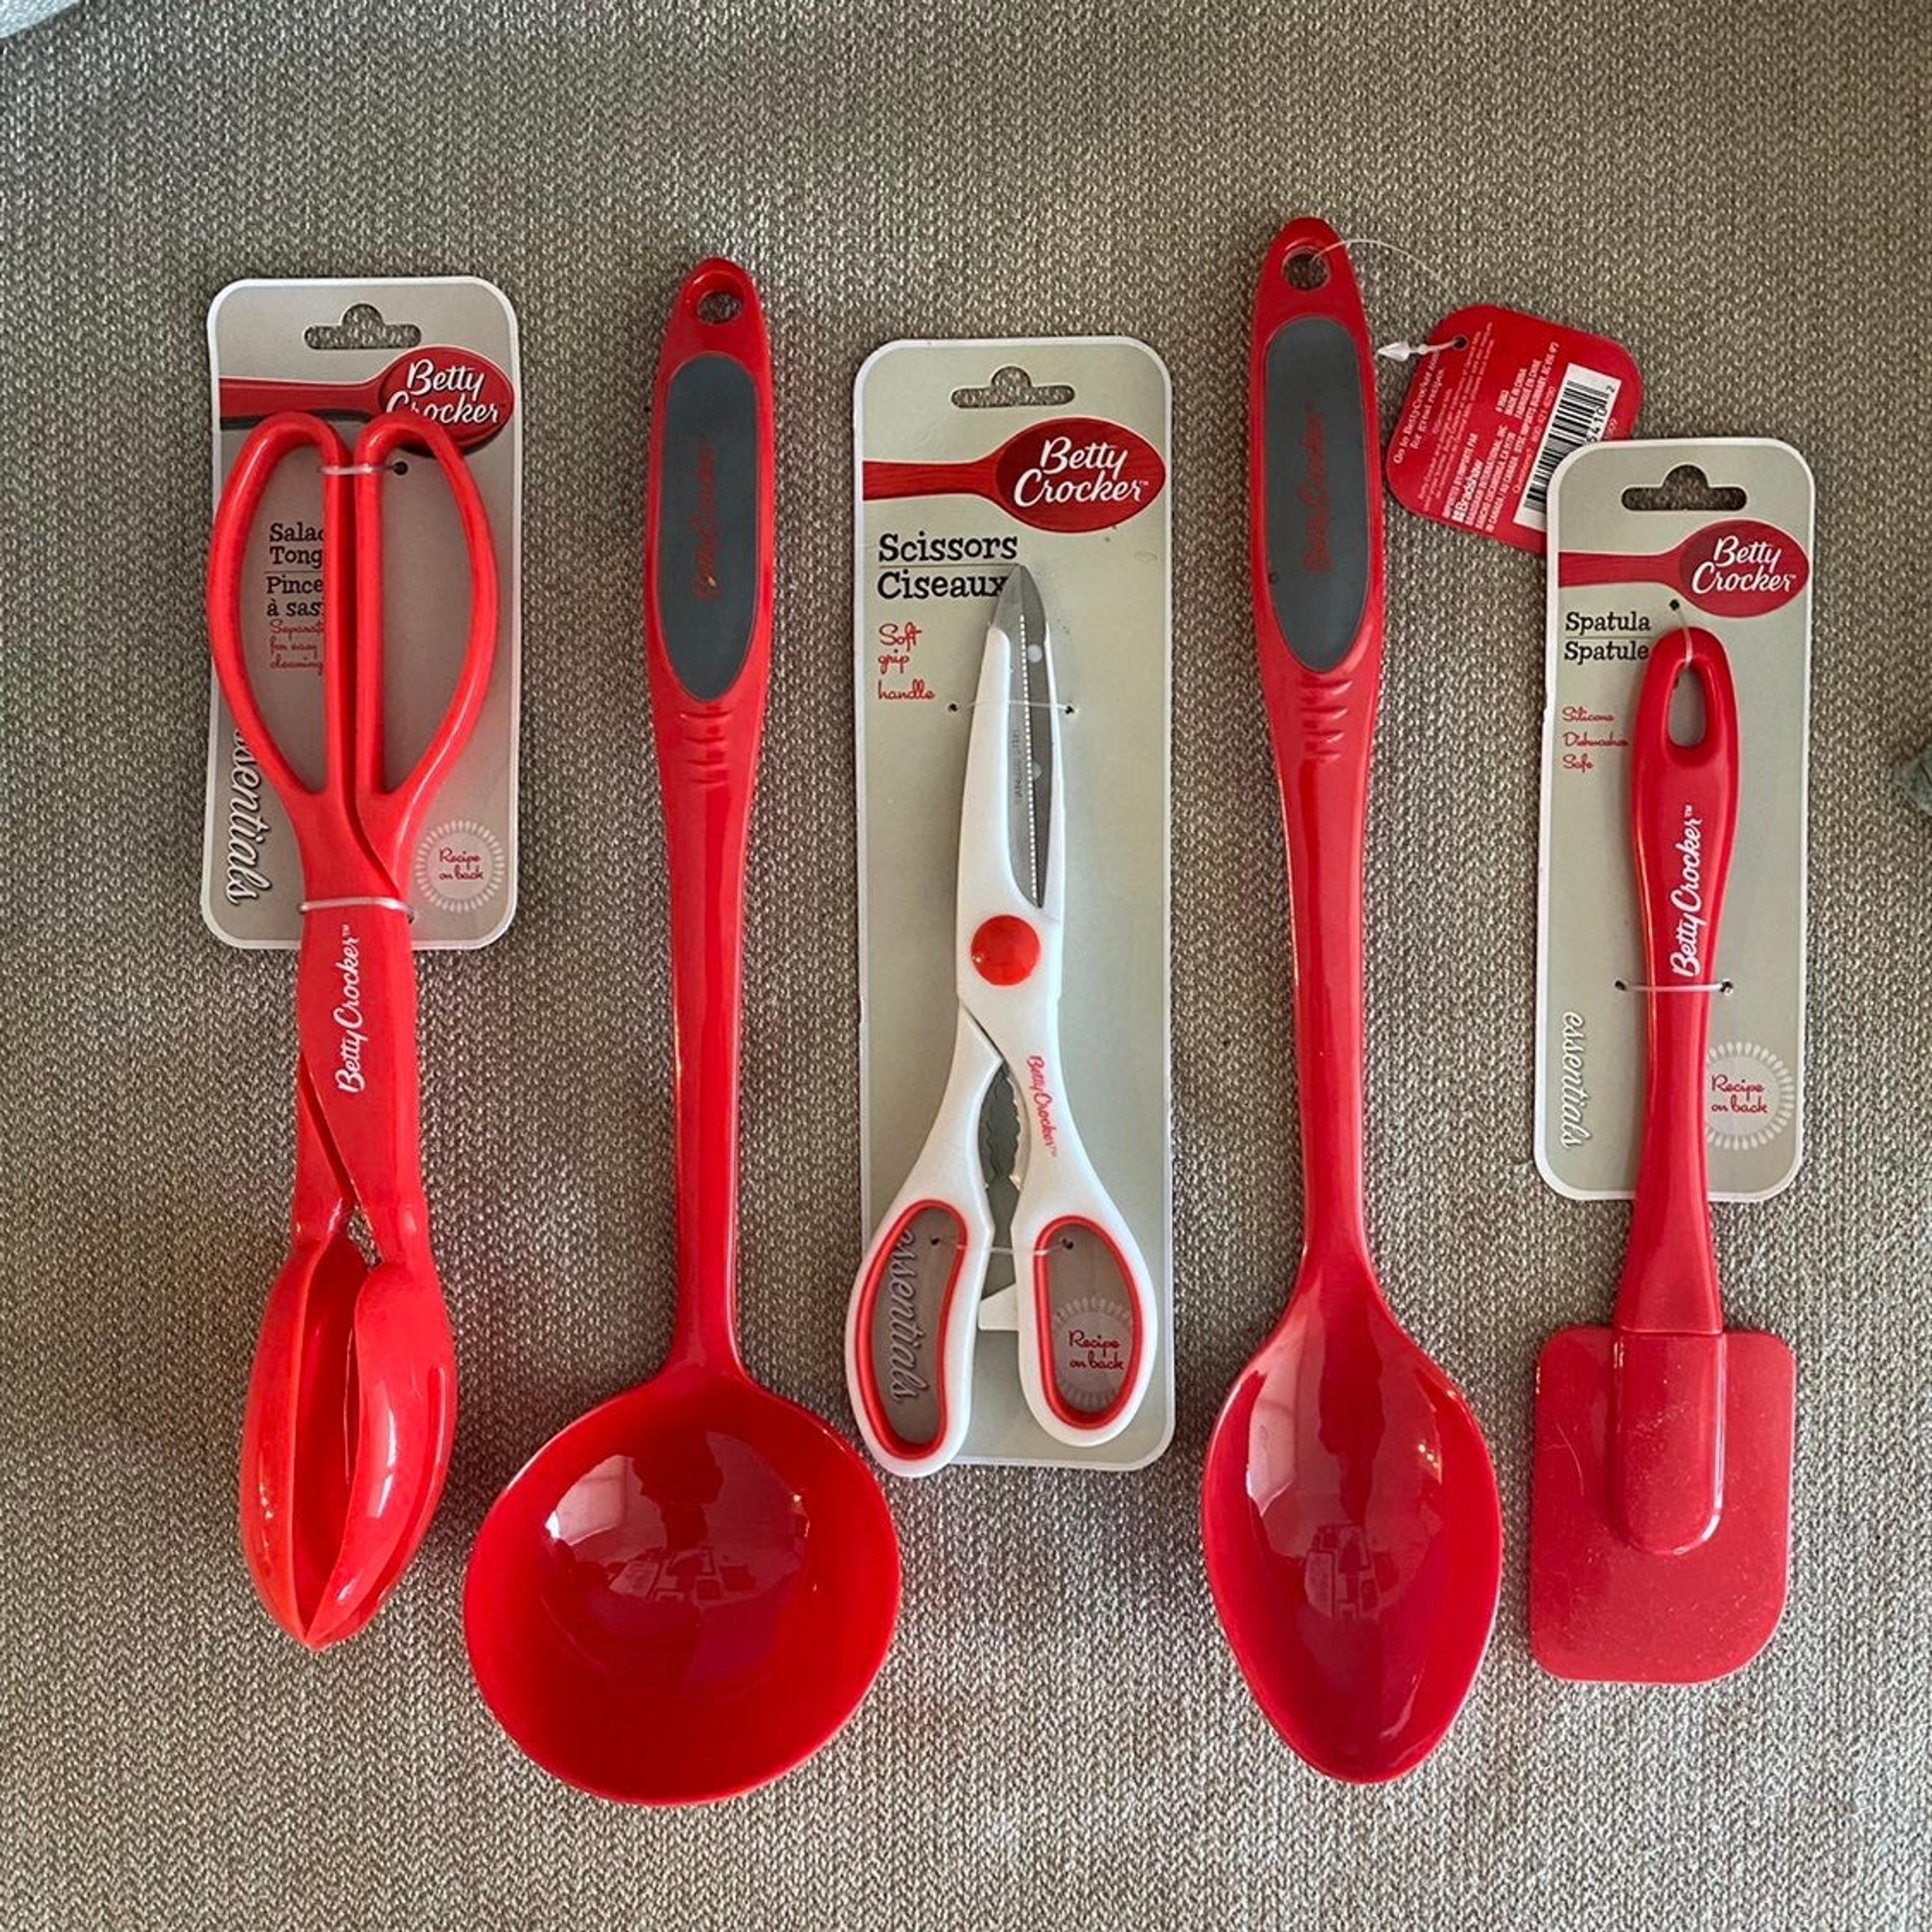 betty crocker utensils